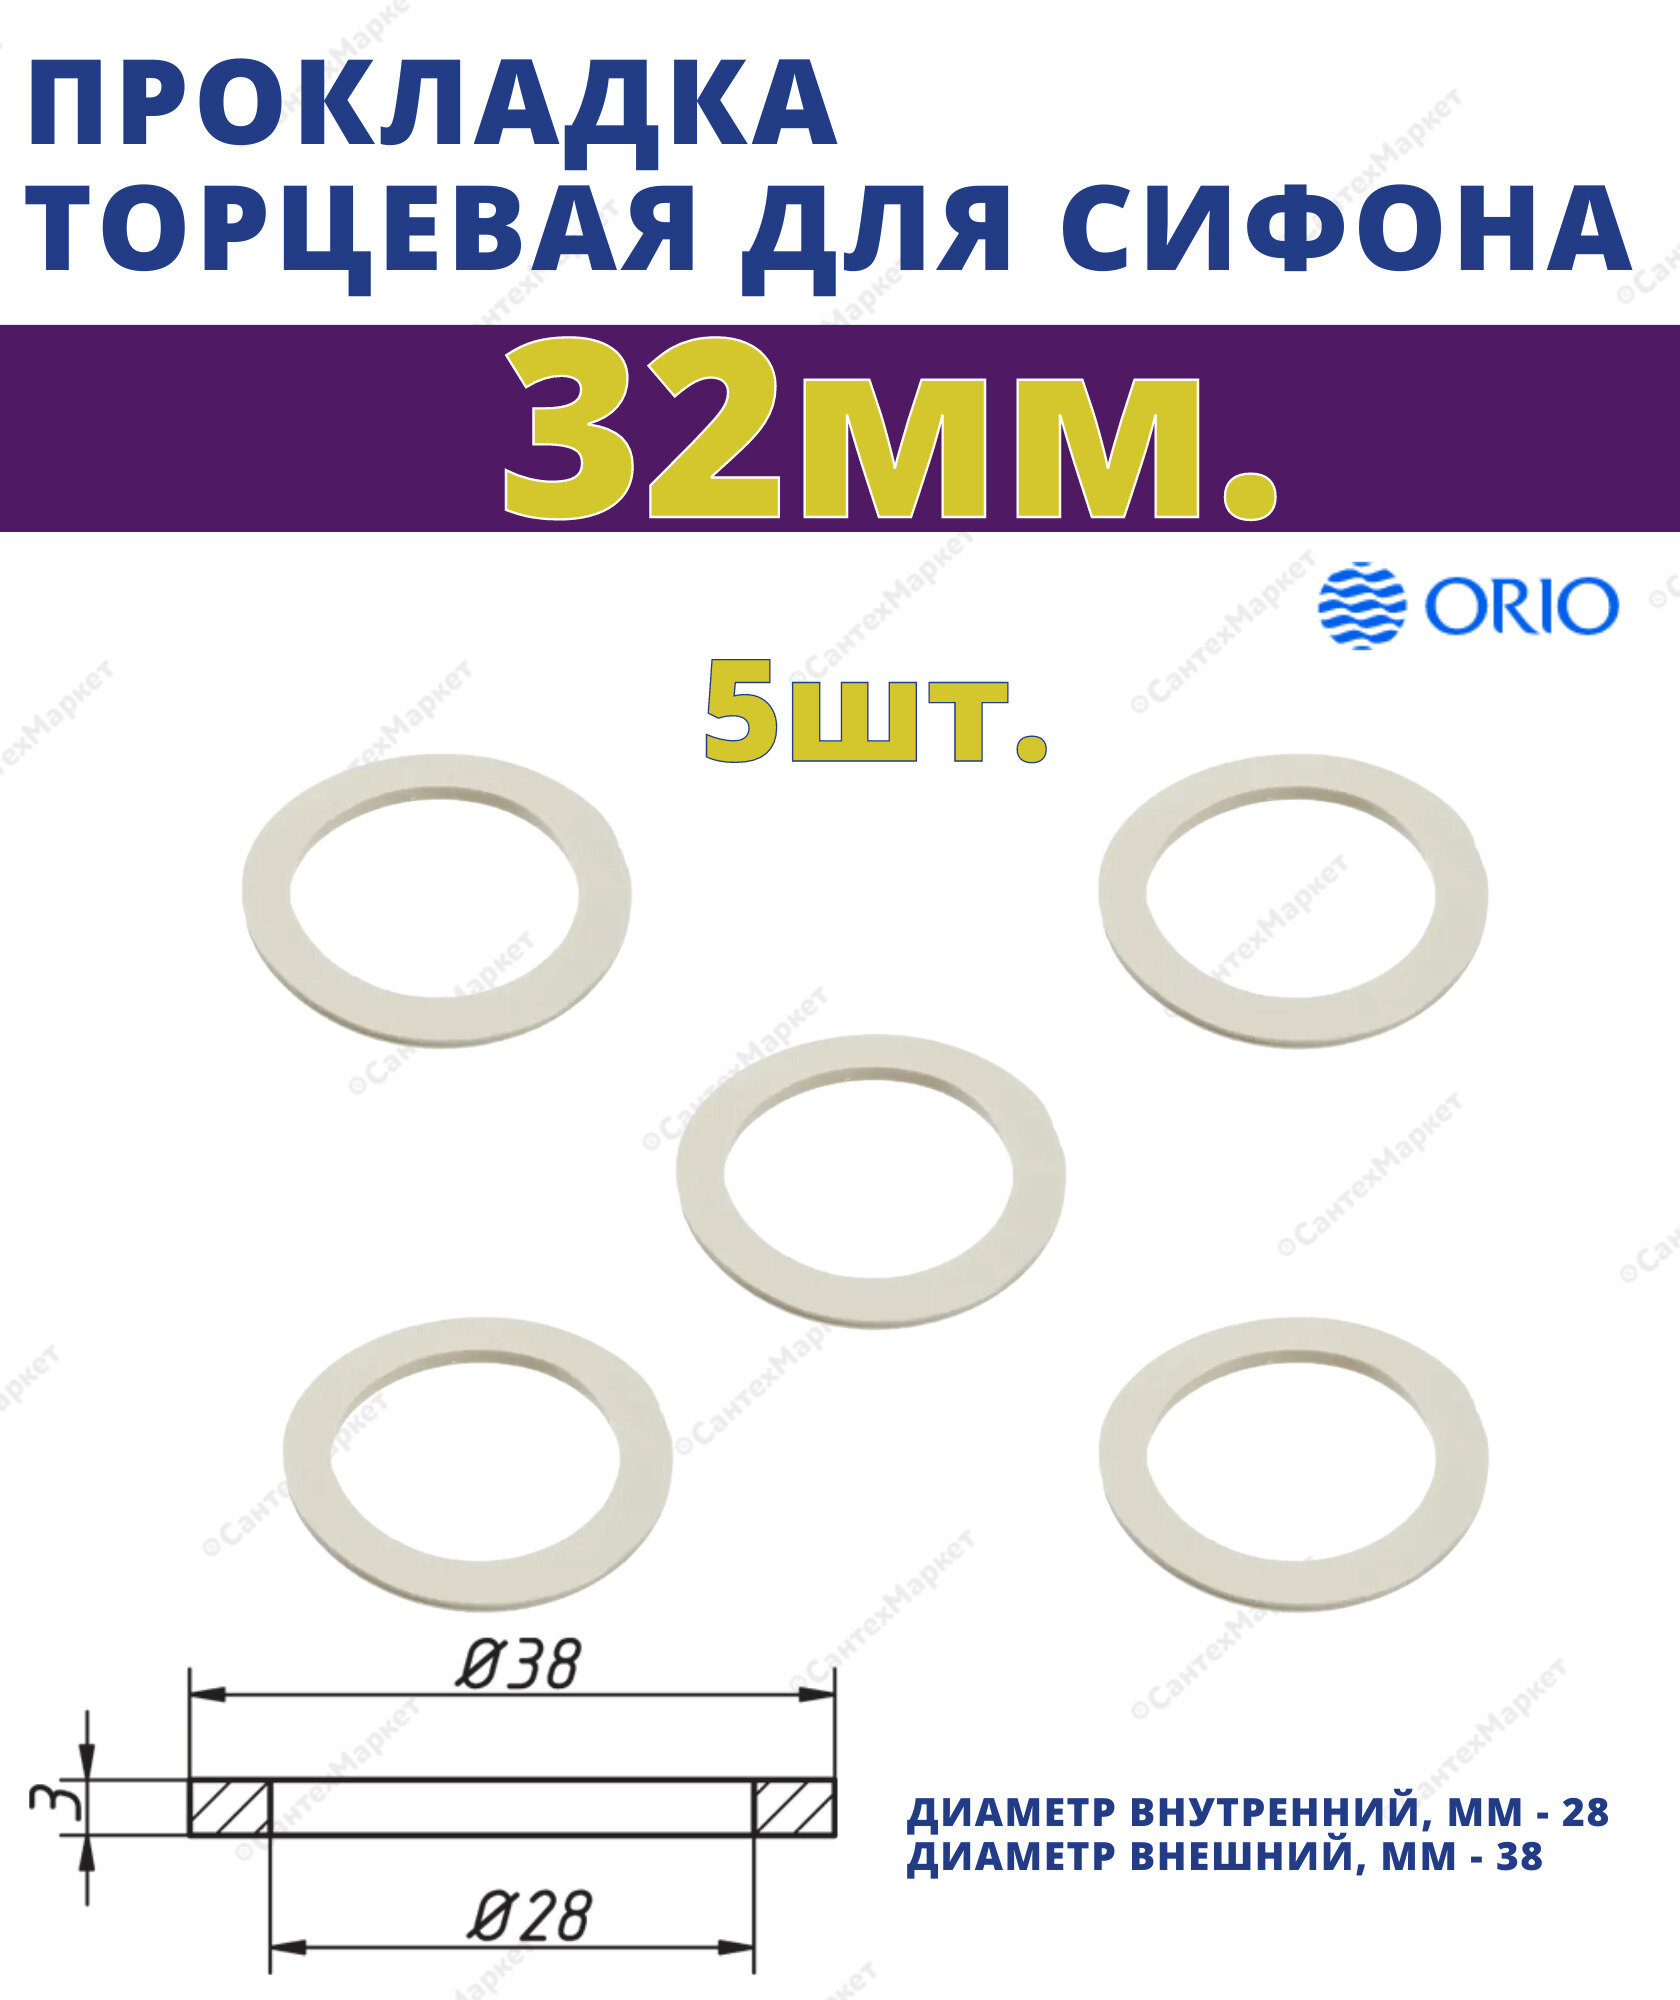 Прокладка торцевая 32 мм. ORIO П-4032, упаковка :5 шт. - фотография № 1